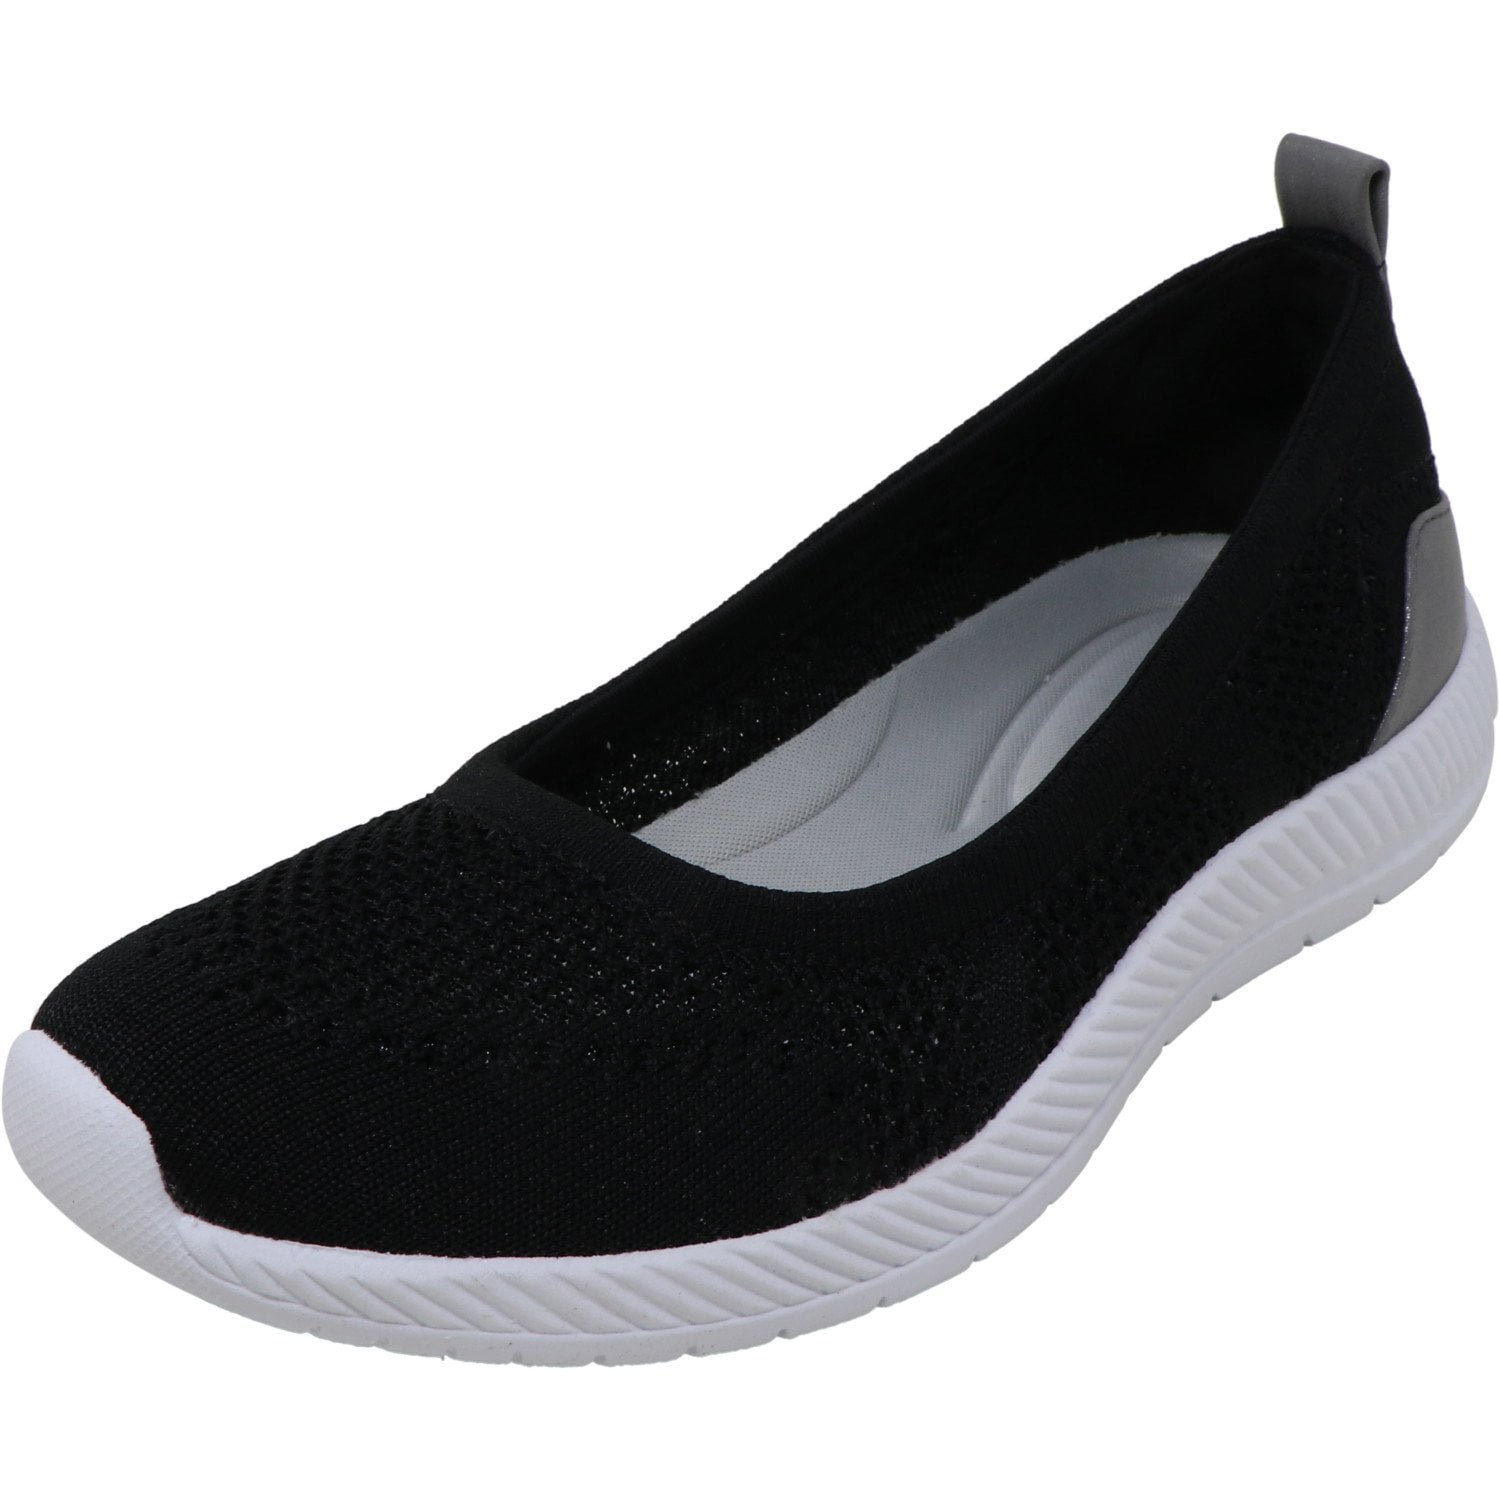 black flat shoes canada